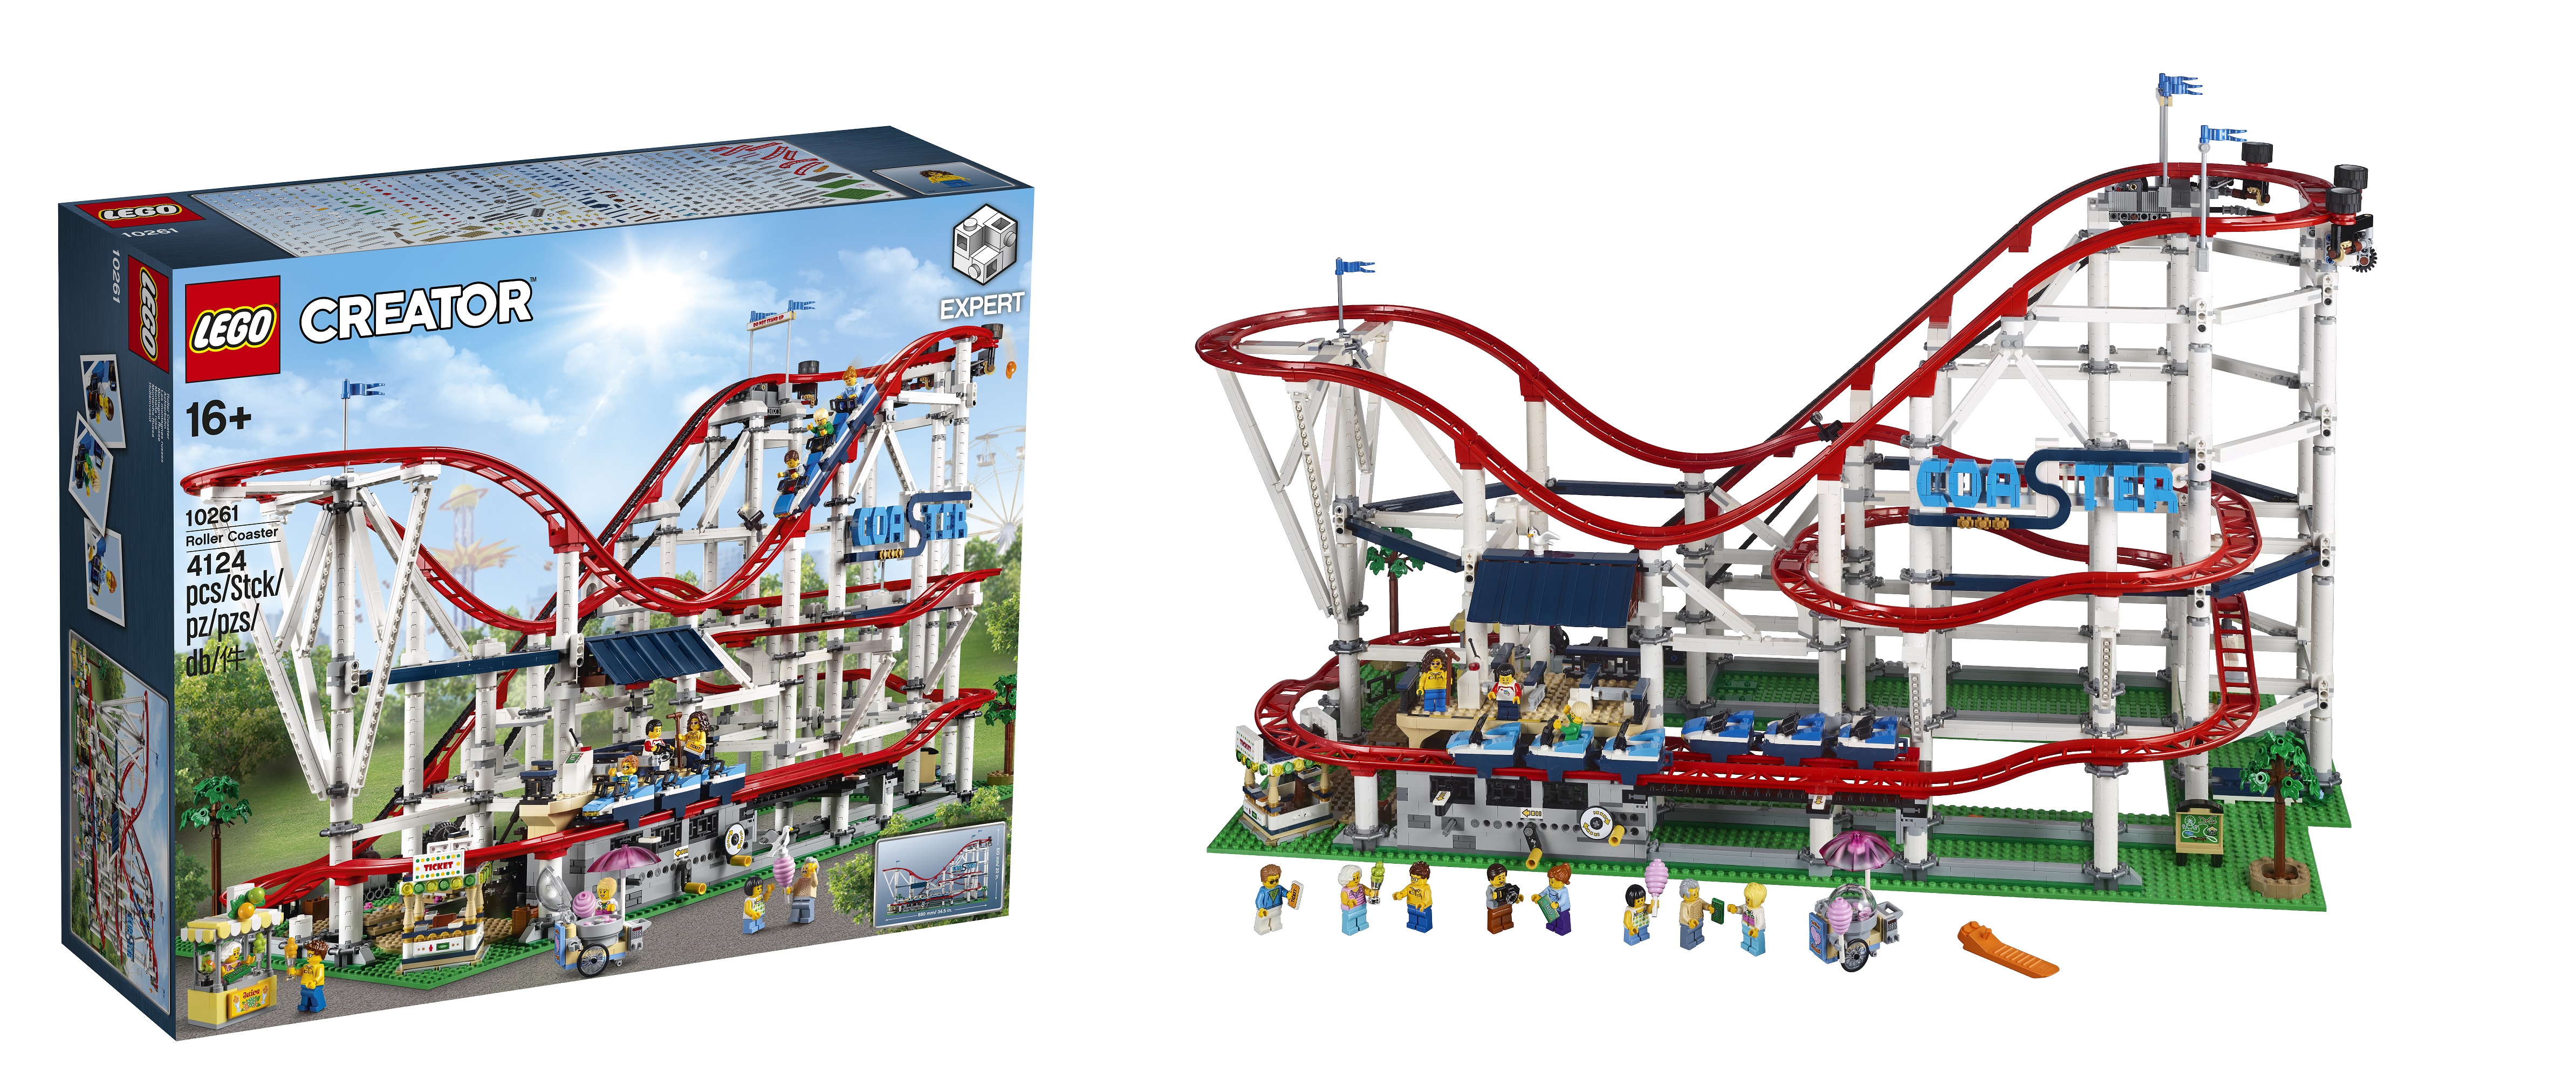 LEGO announces 10261 Creator Coaster! - Brick Blog